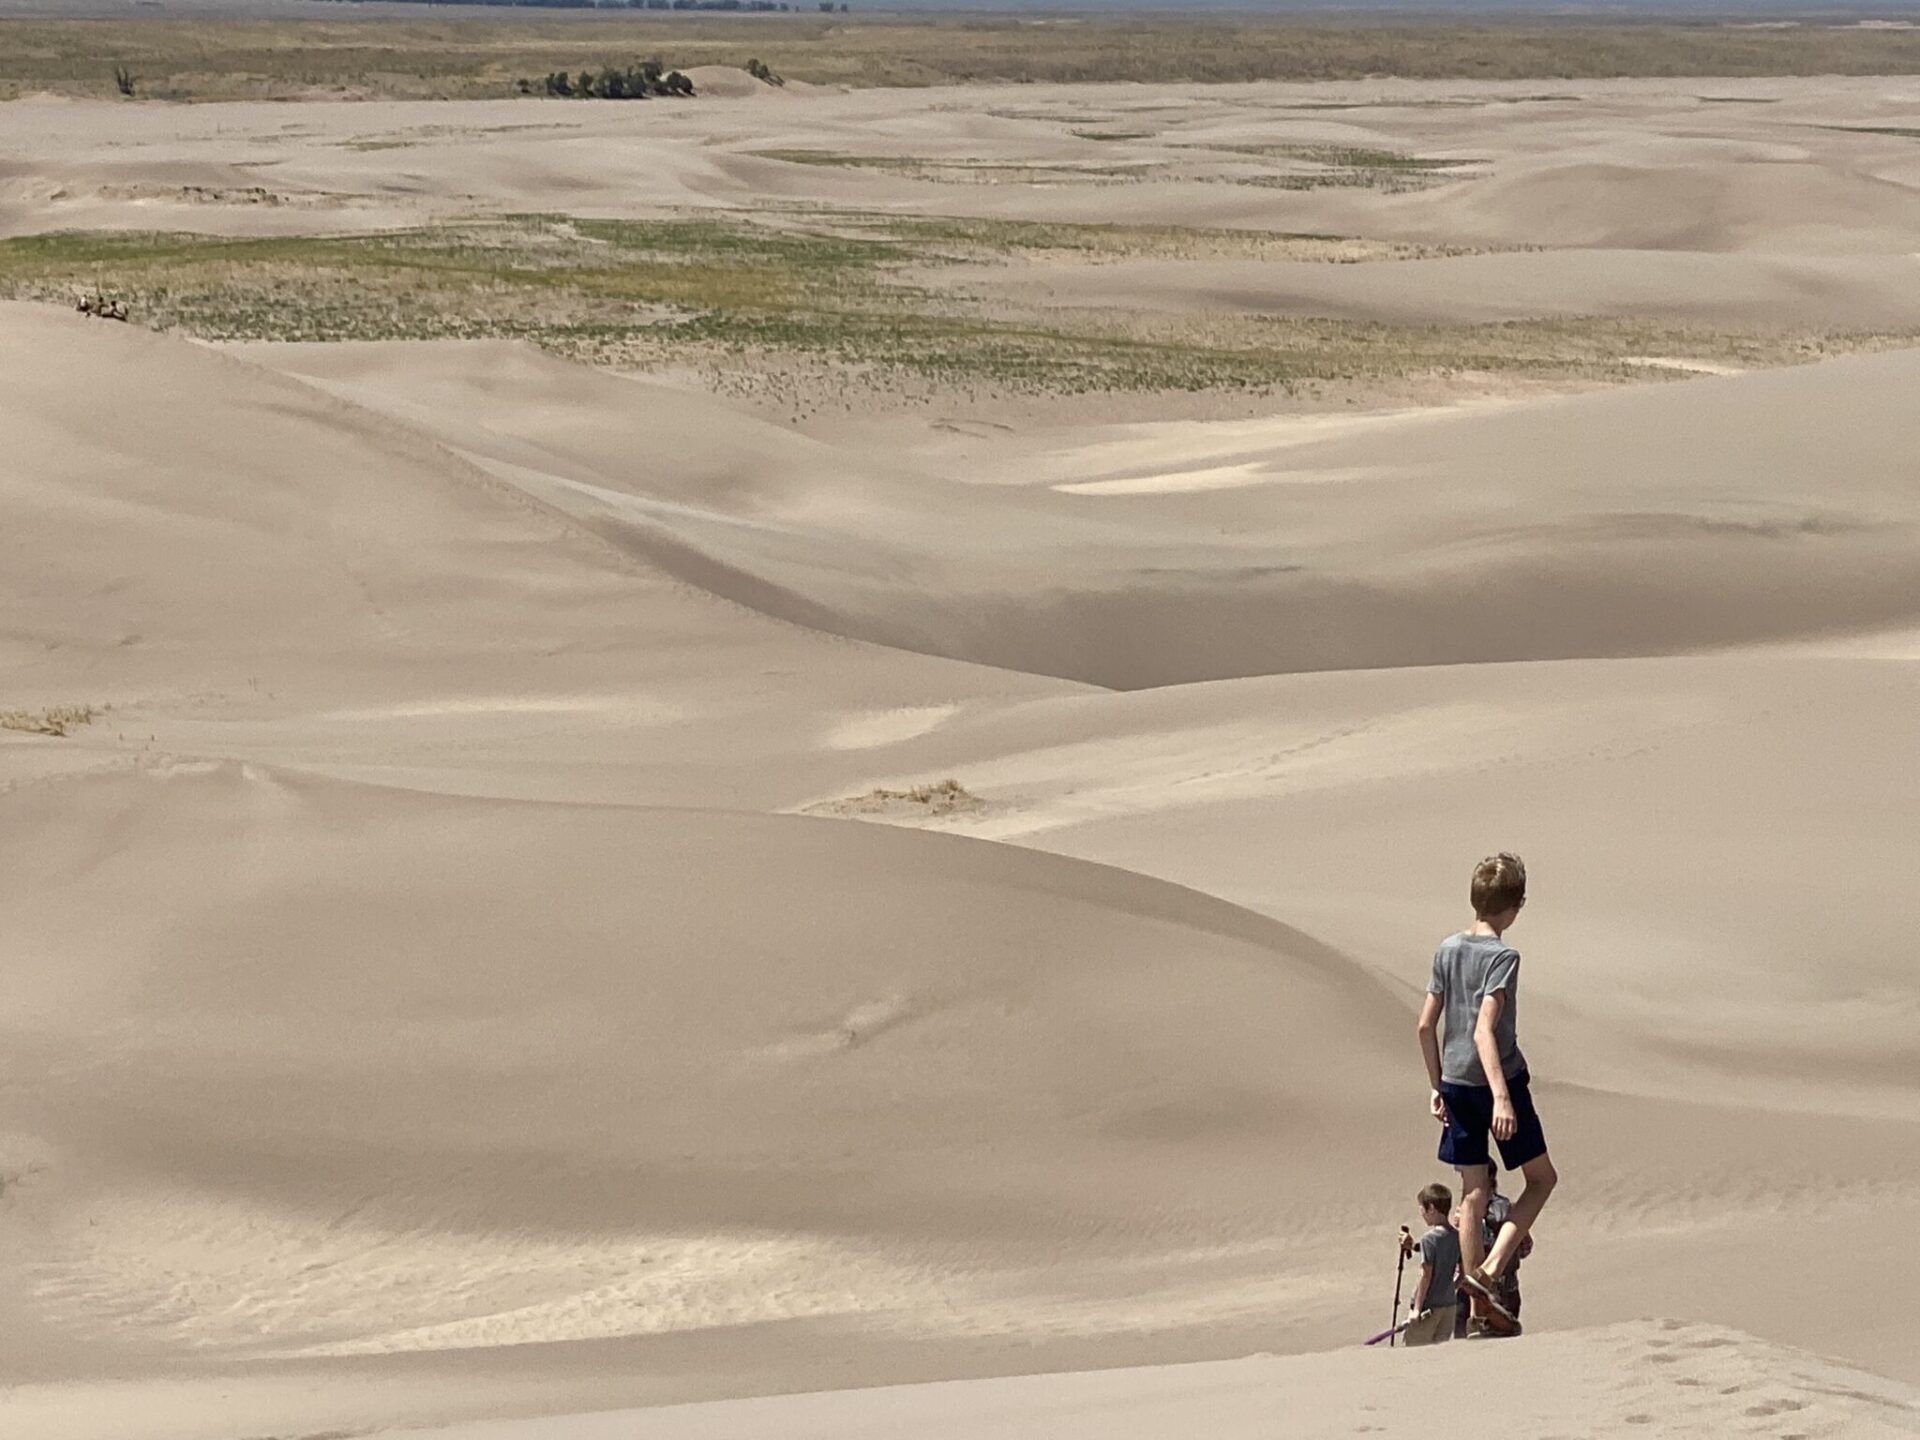 Episode 156 | Great Sand Dunes National Park, Storing Your Rig